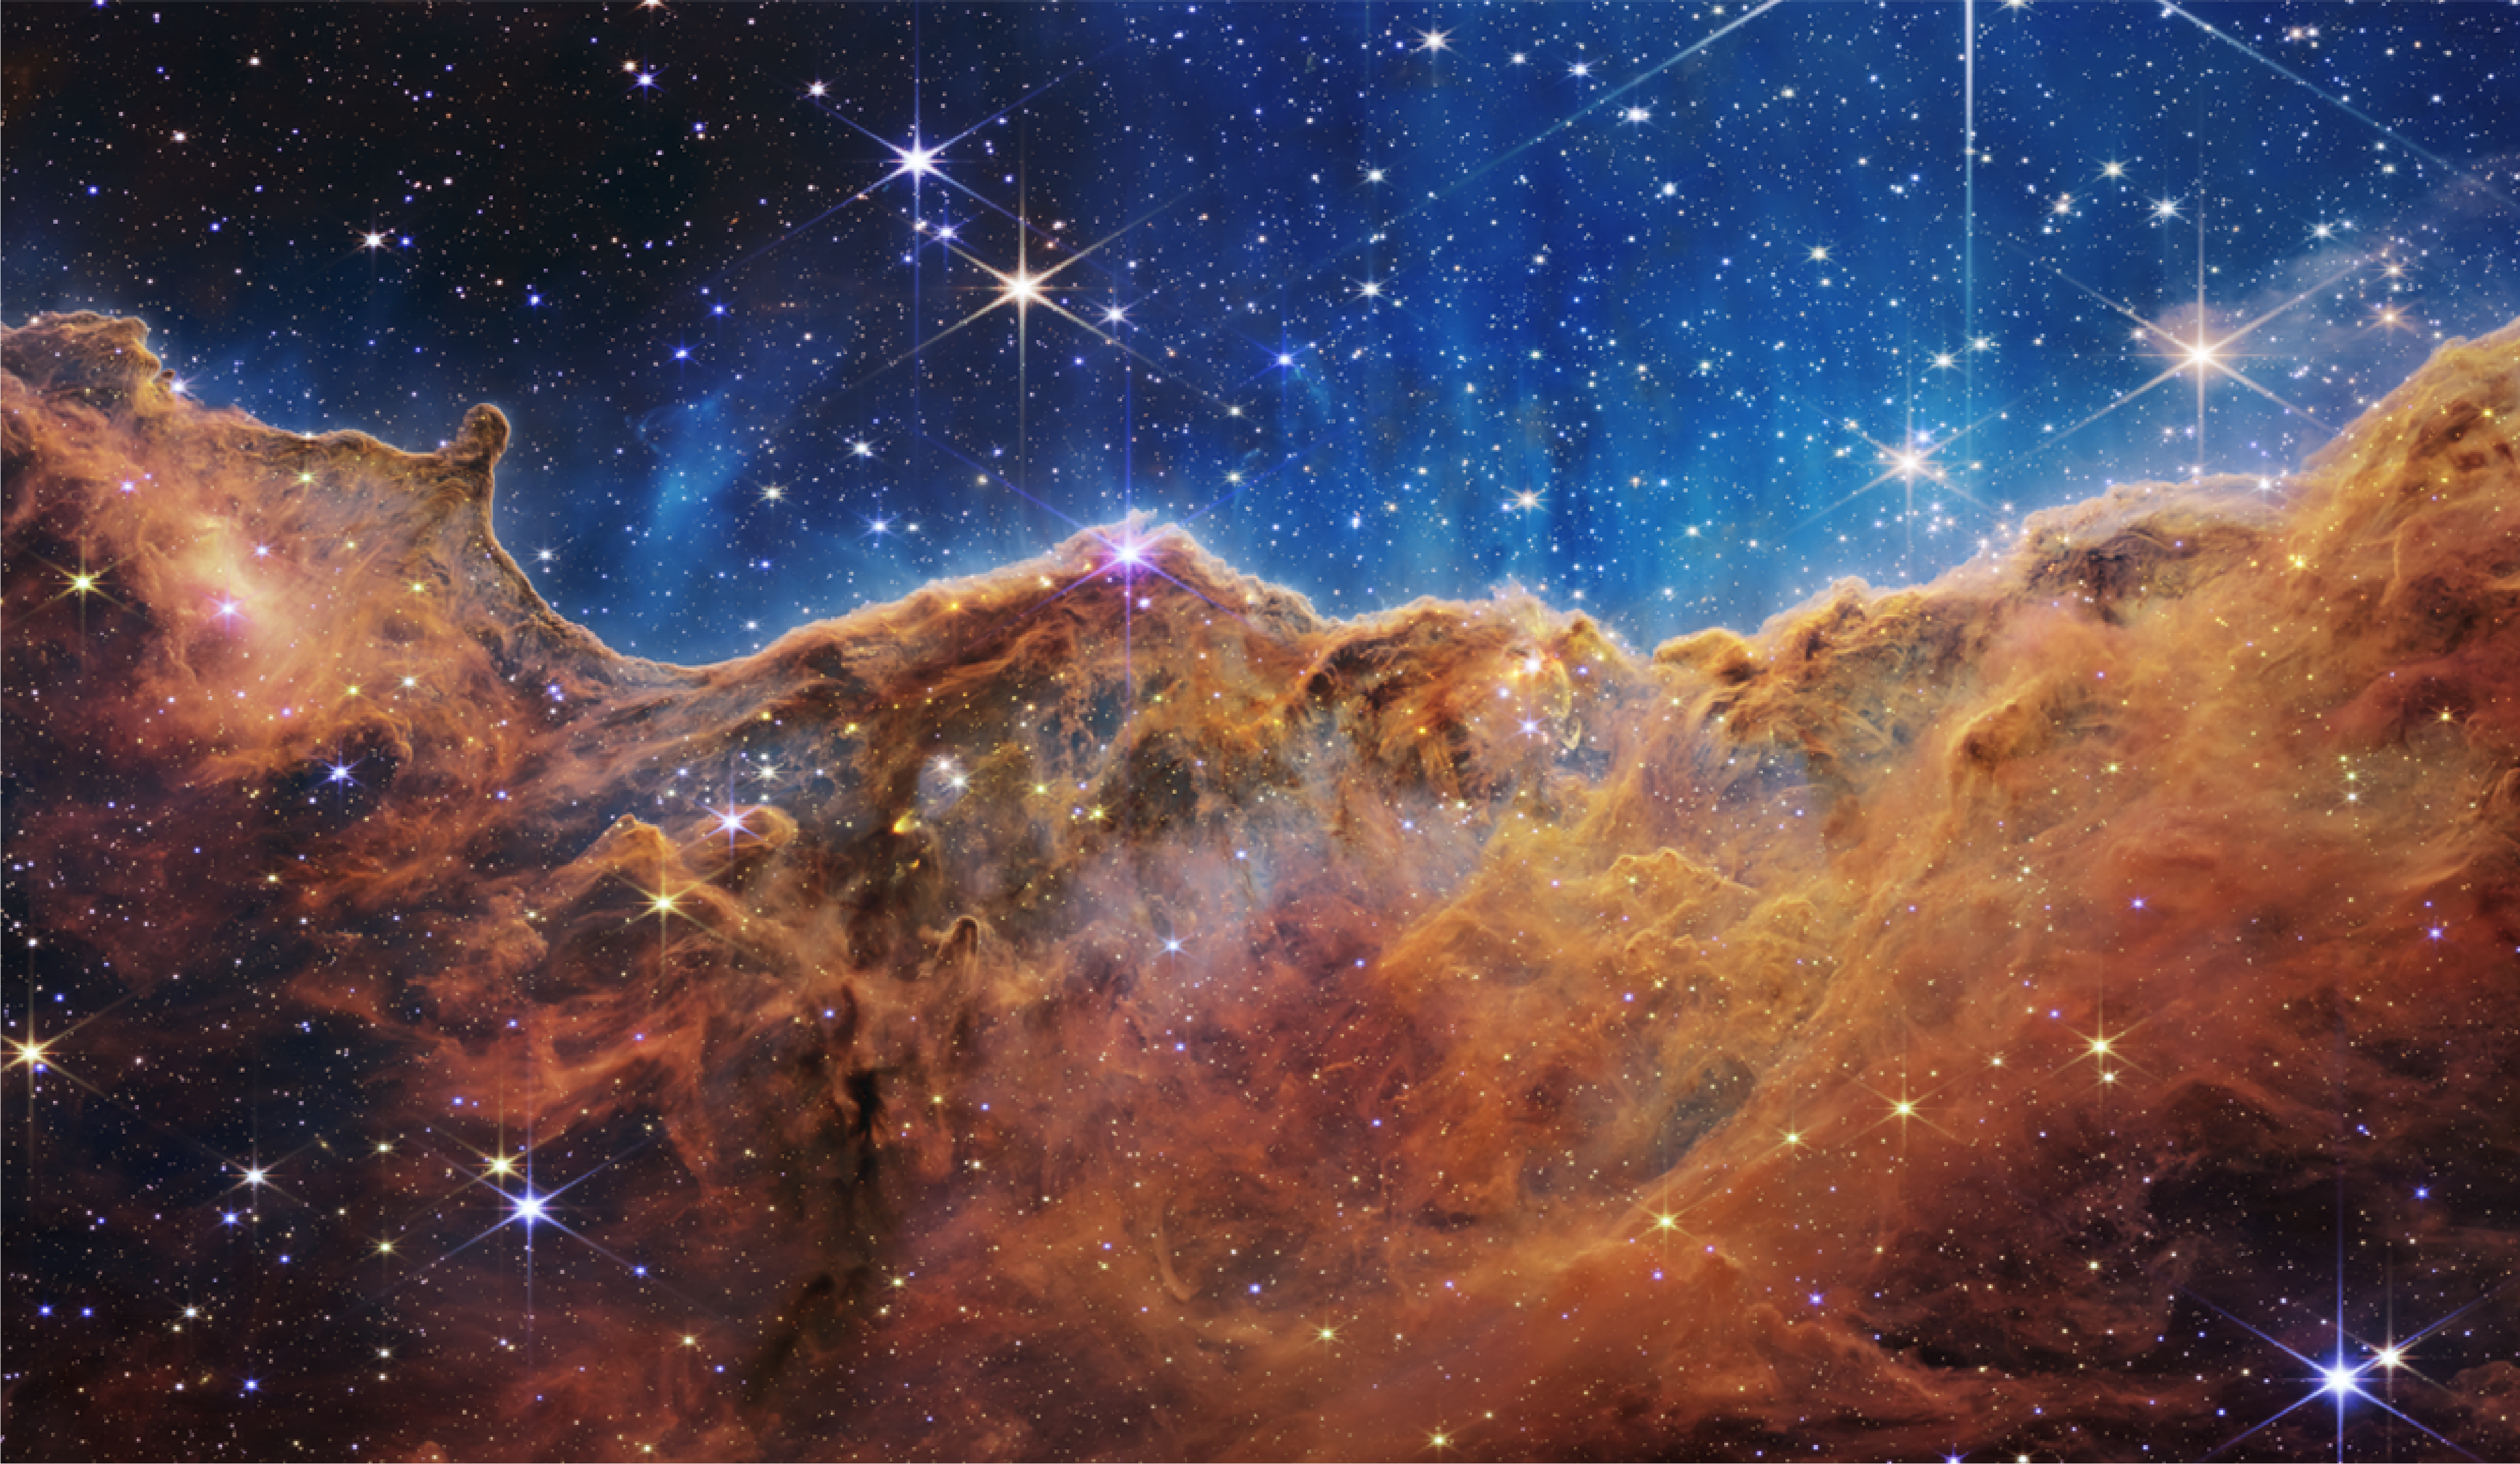 The Carina Nebula - Stellar Nursery